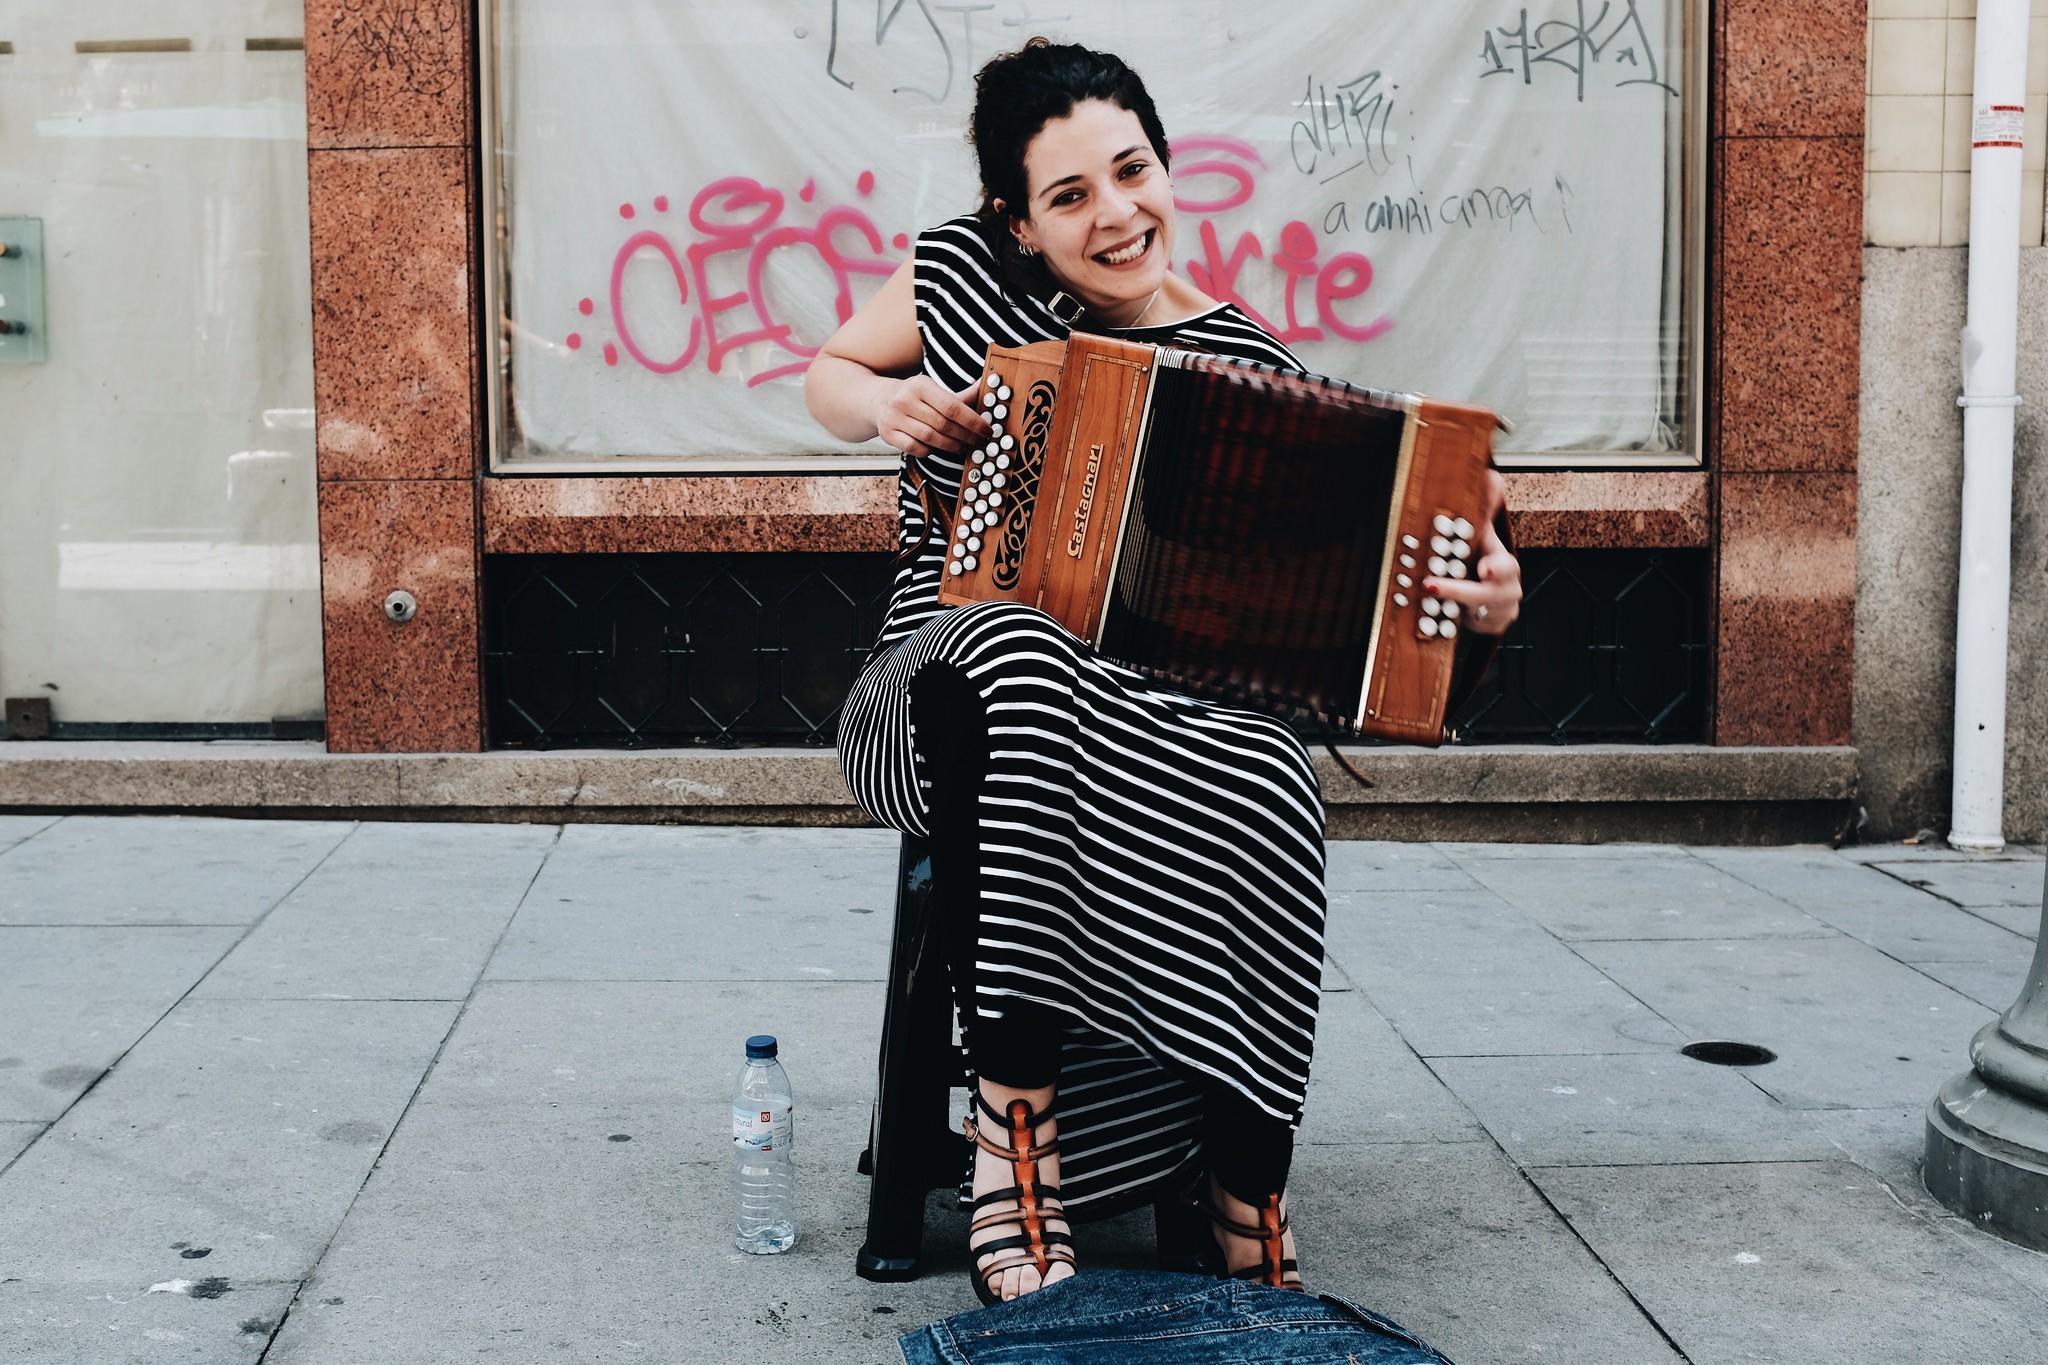 People 2048x1365 women street music music musical instrument women outdoors urban accordions